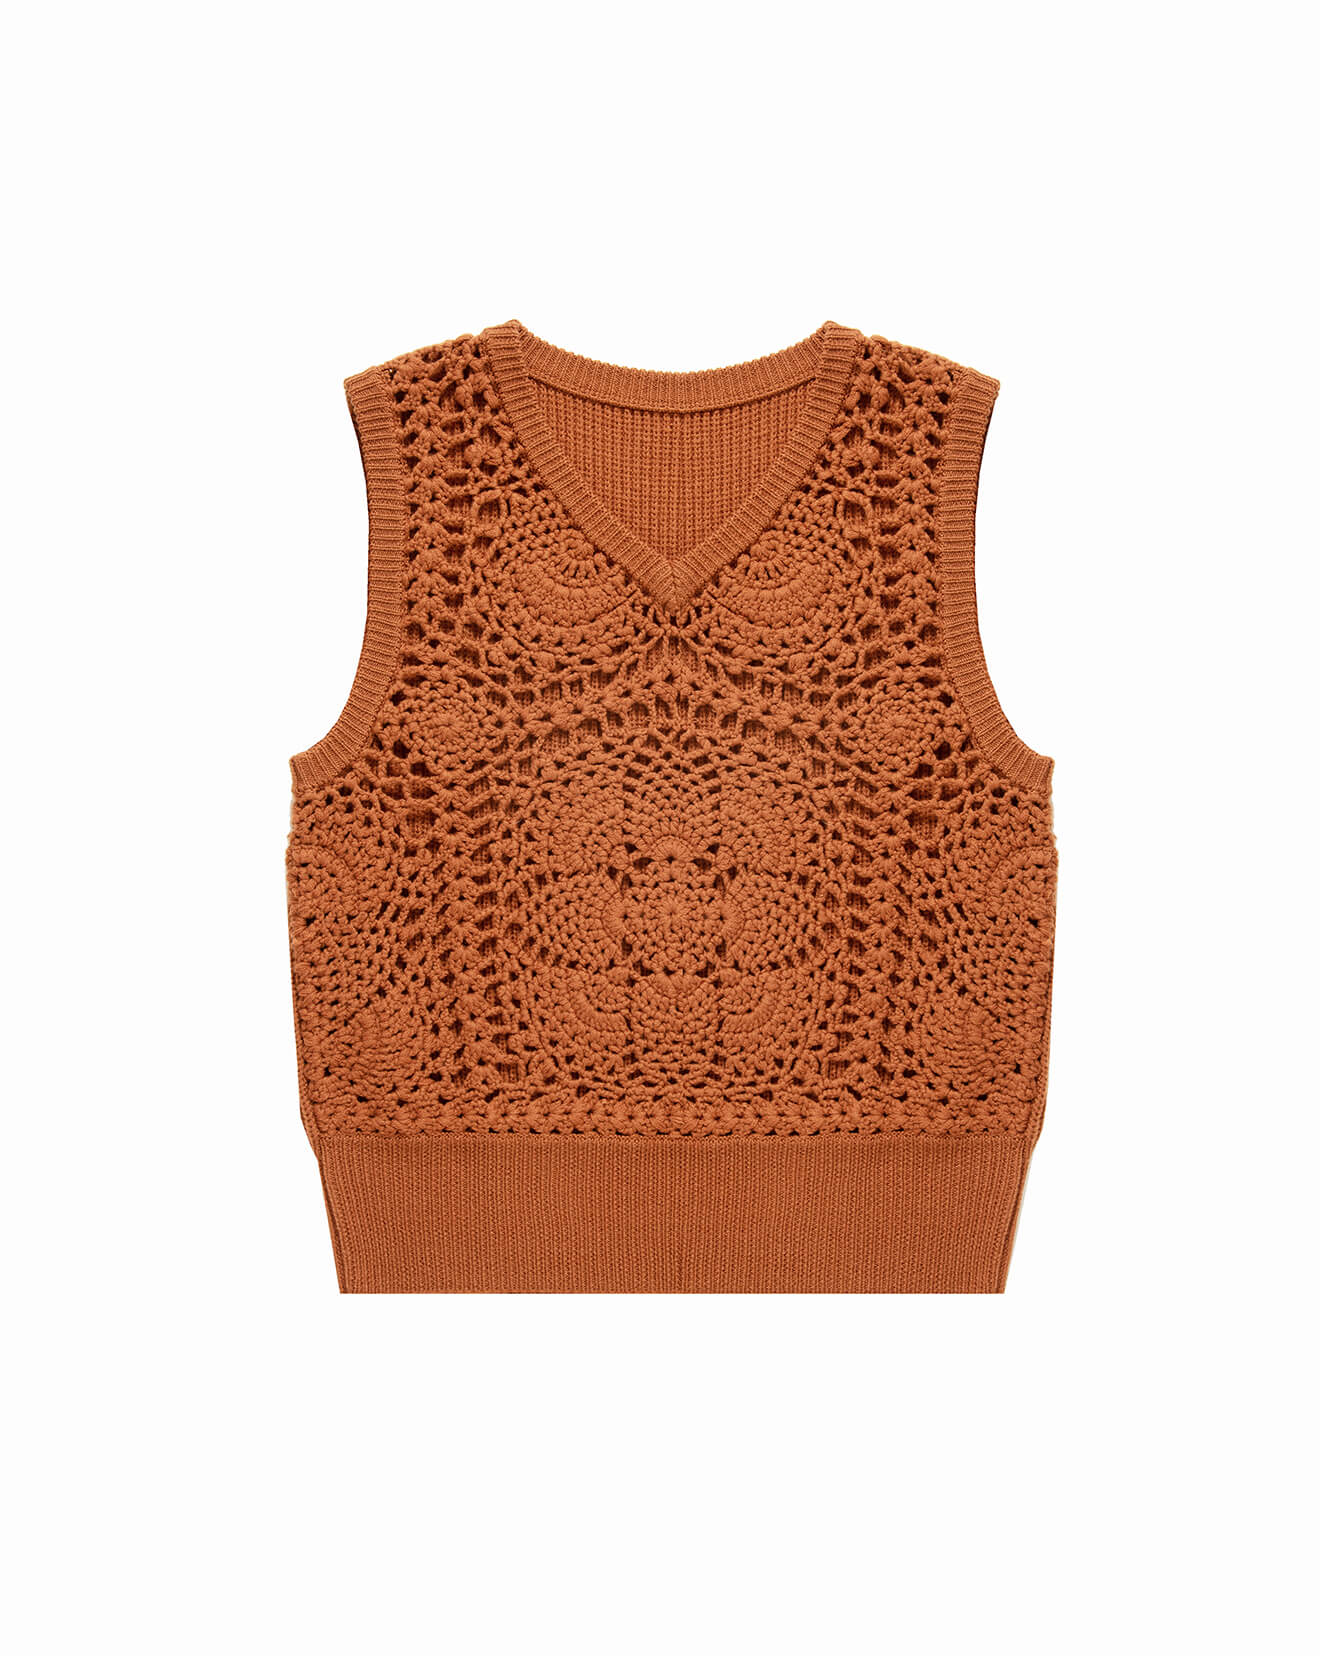 cotto waistcoat with crochet inlays